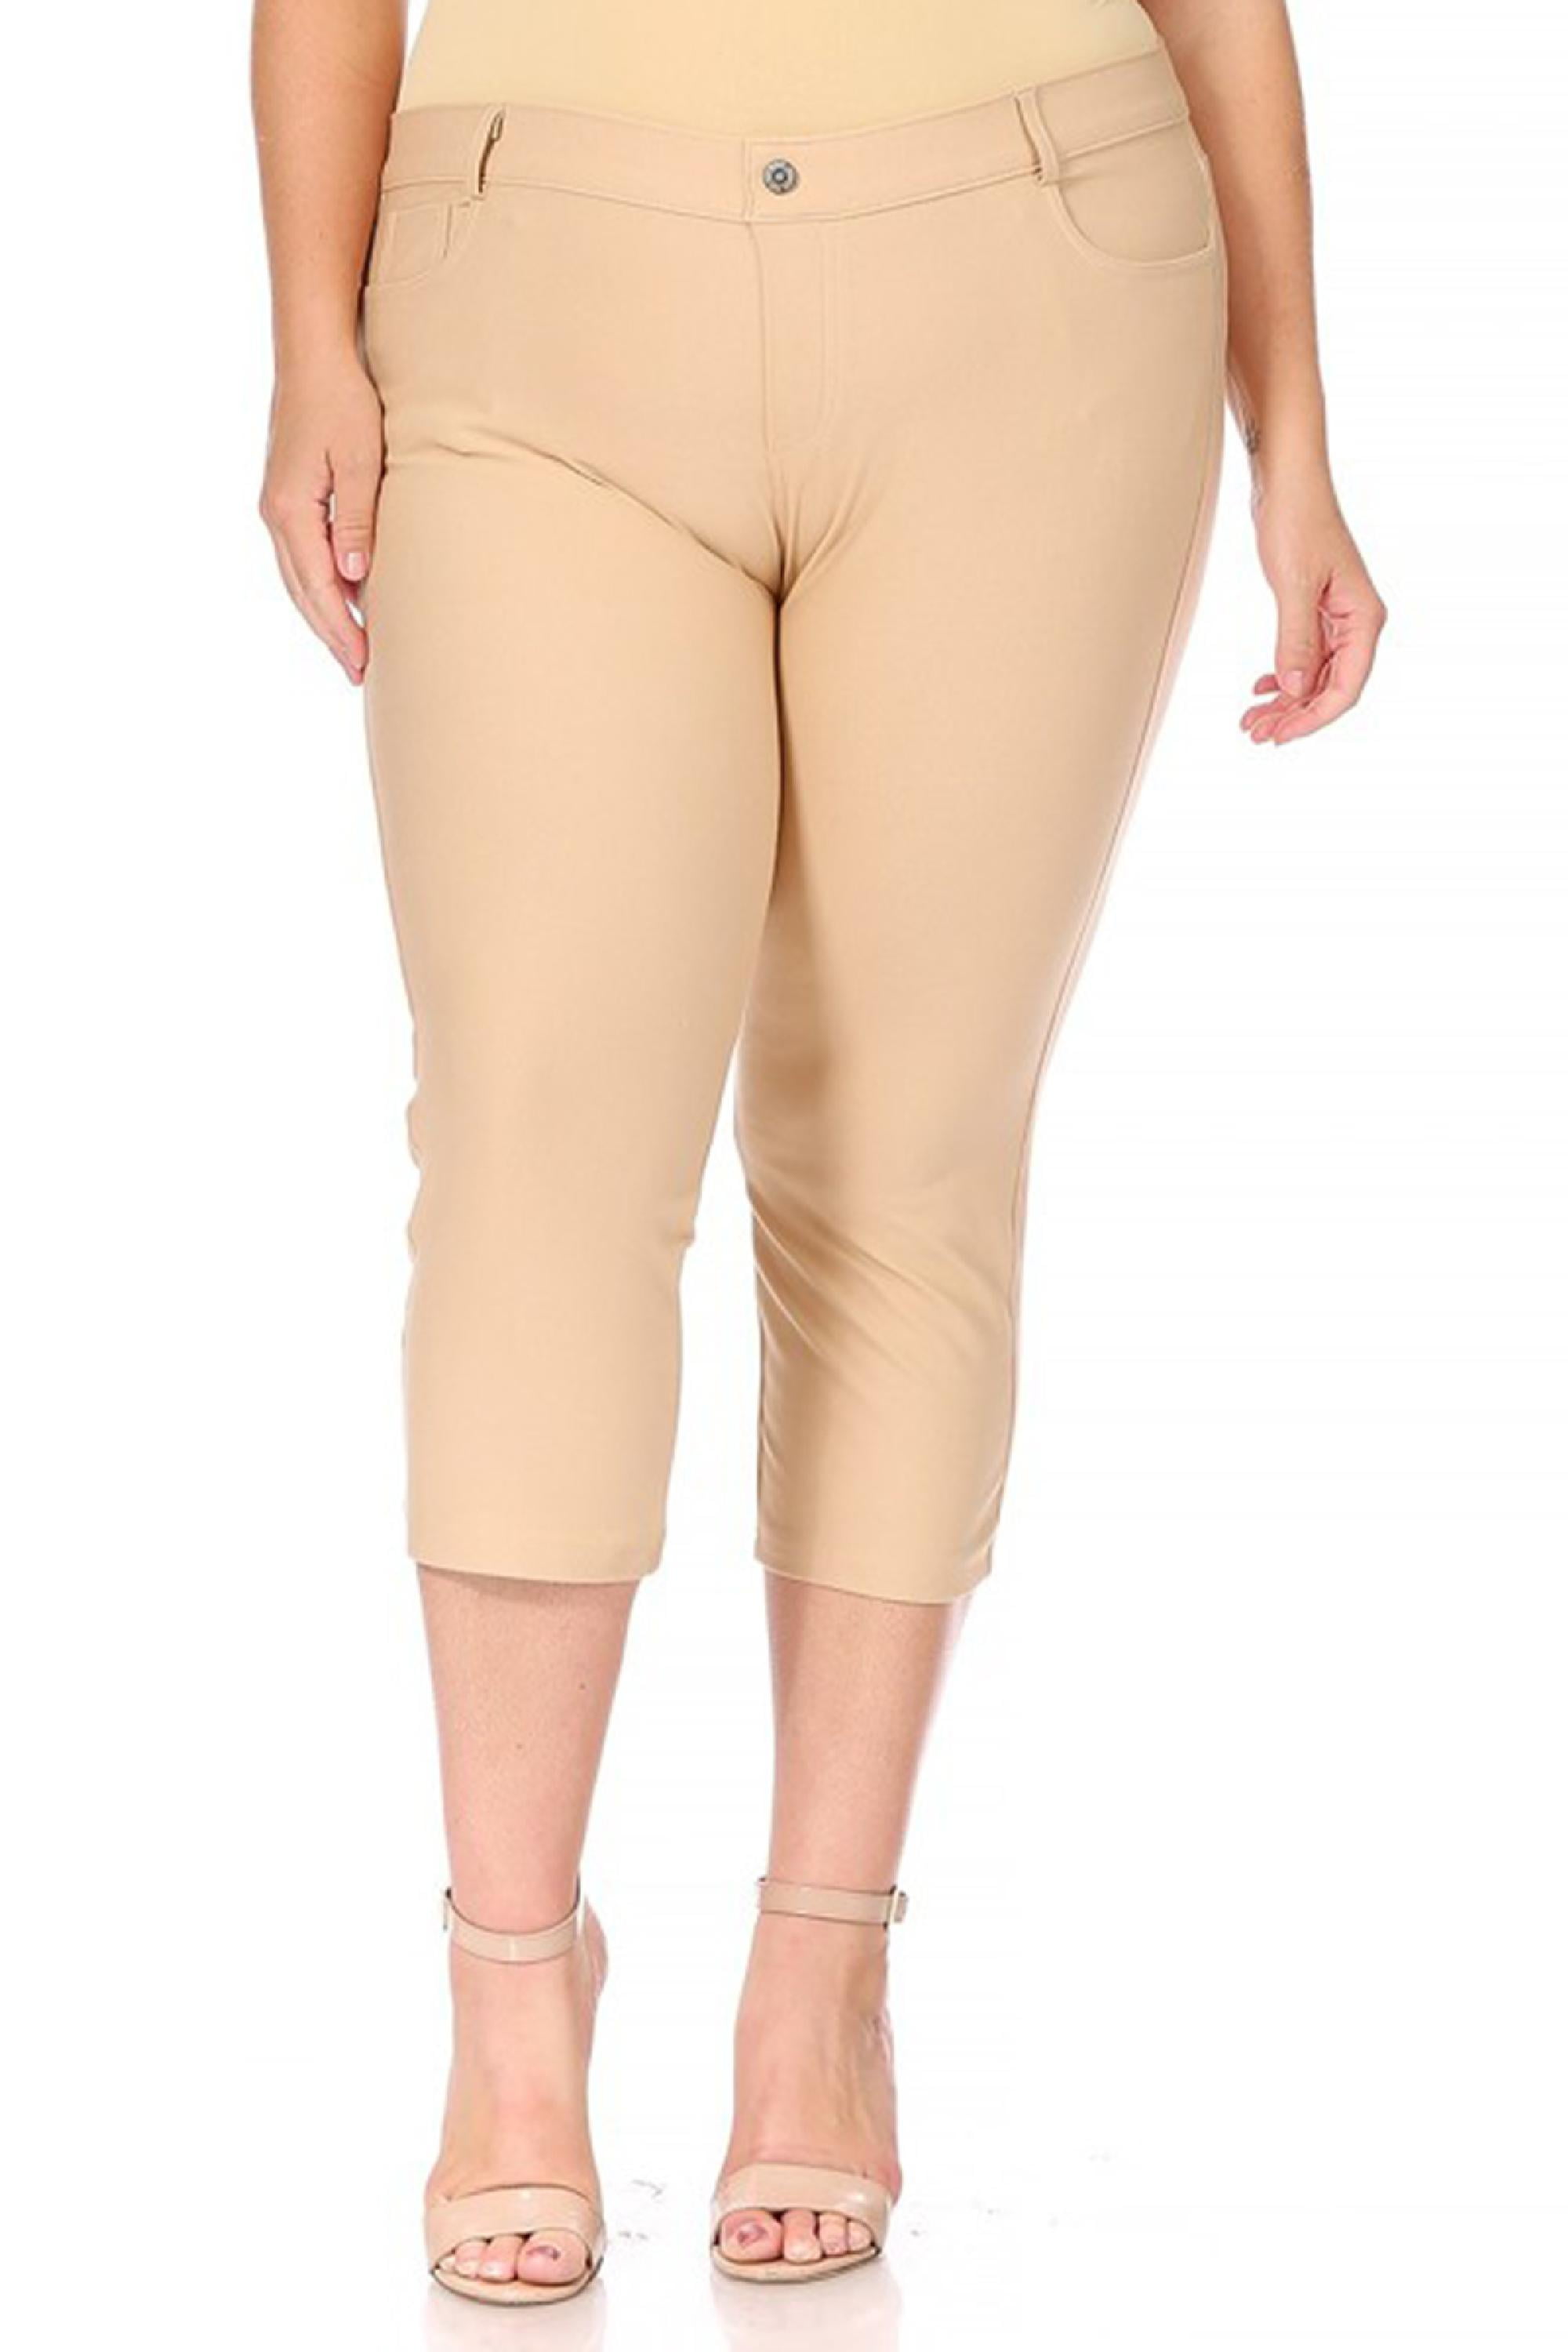 Women's Capri Jeans Skinny Jeggings Ripped Distressed Pull-On Denim Capris  Pockets Pants Regular & Plus Size